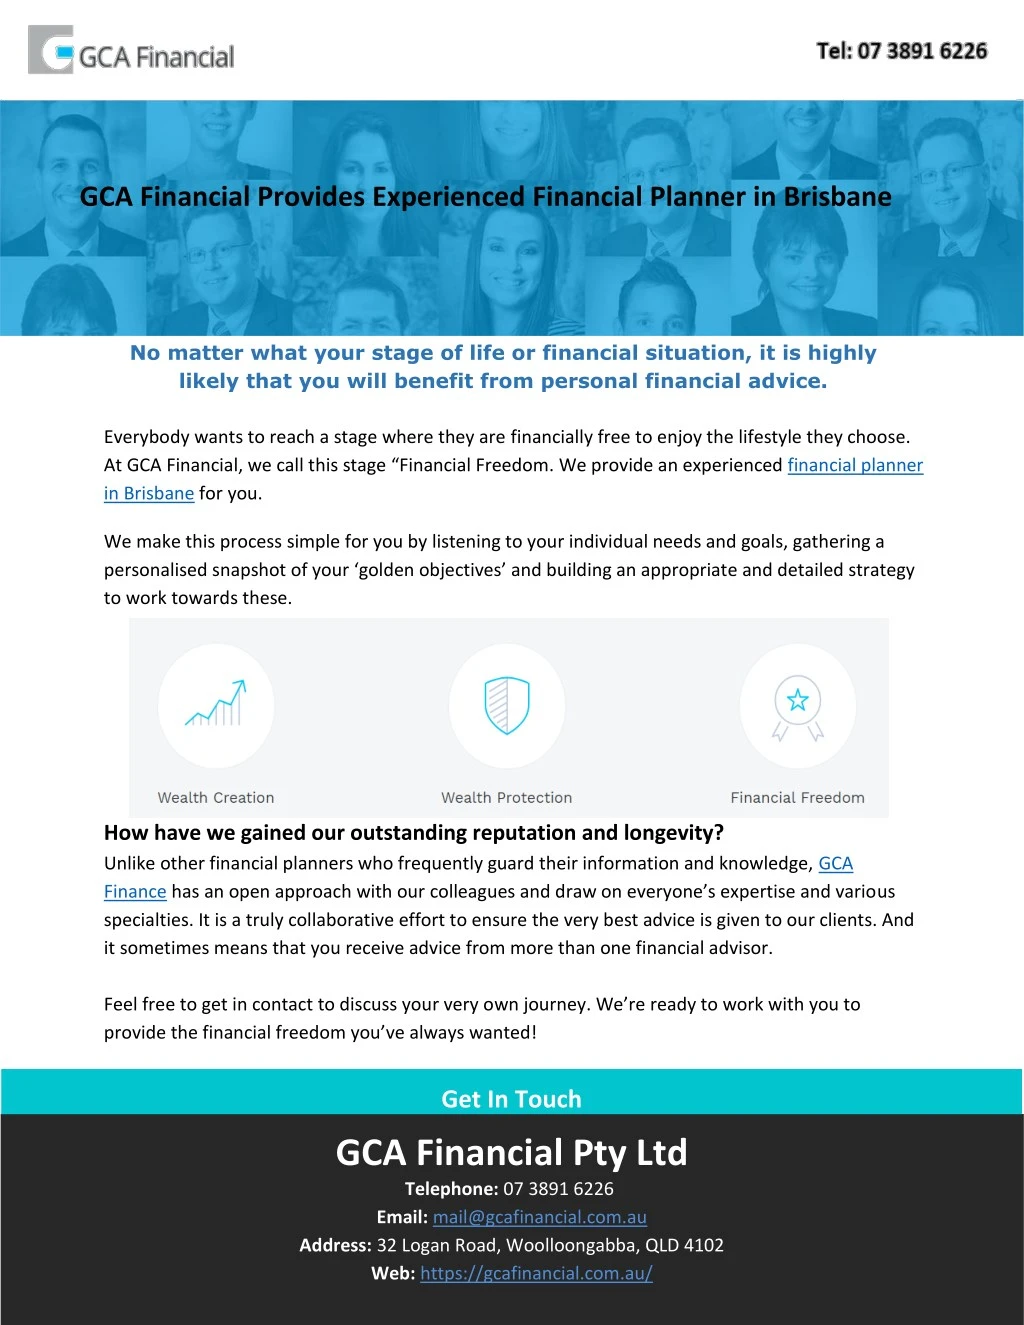 gca financial provides experienced financial